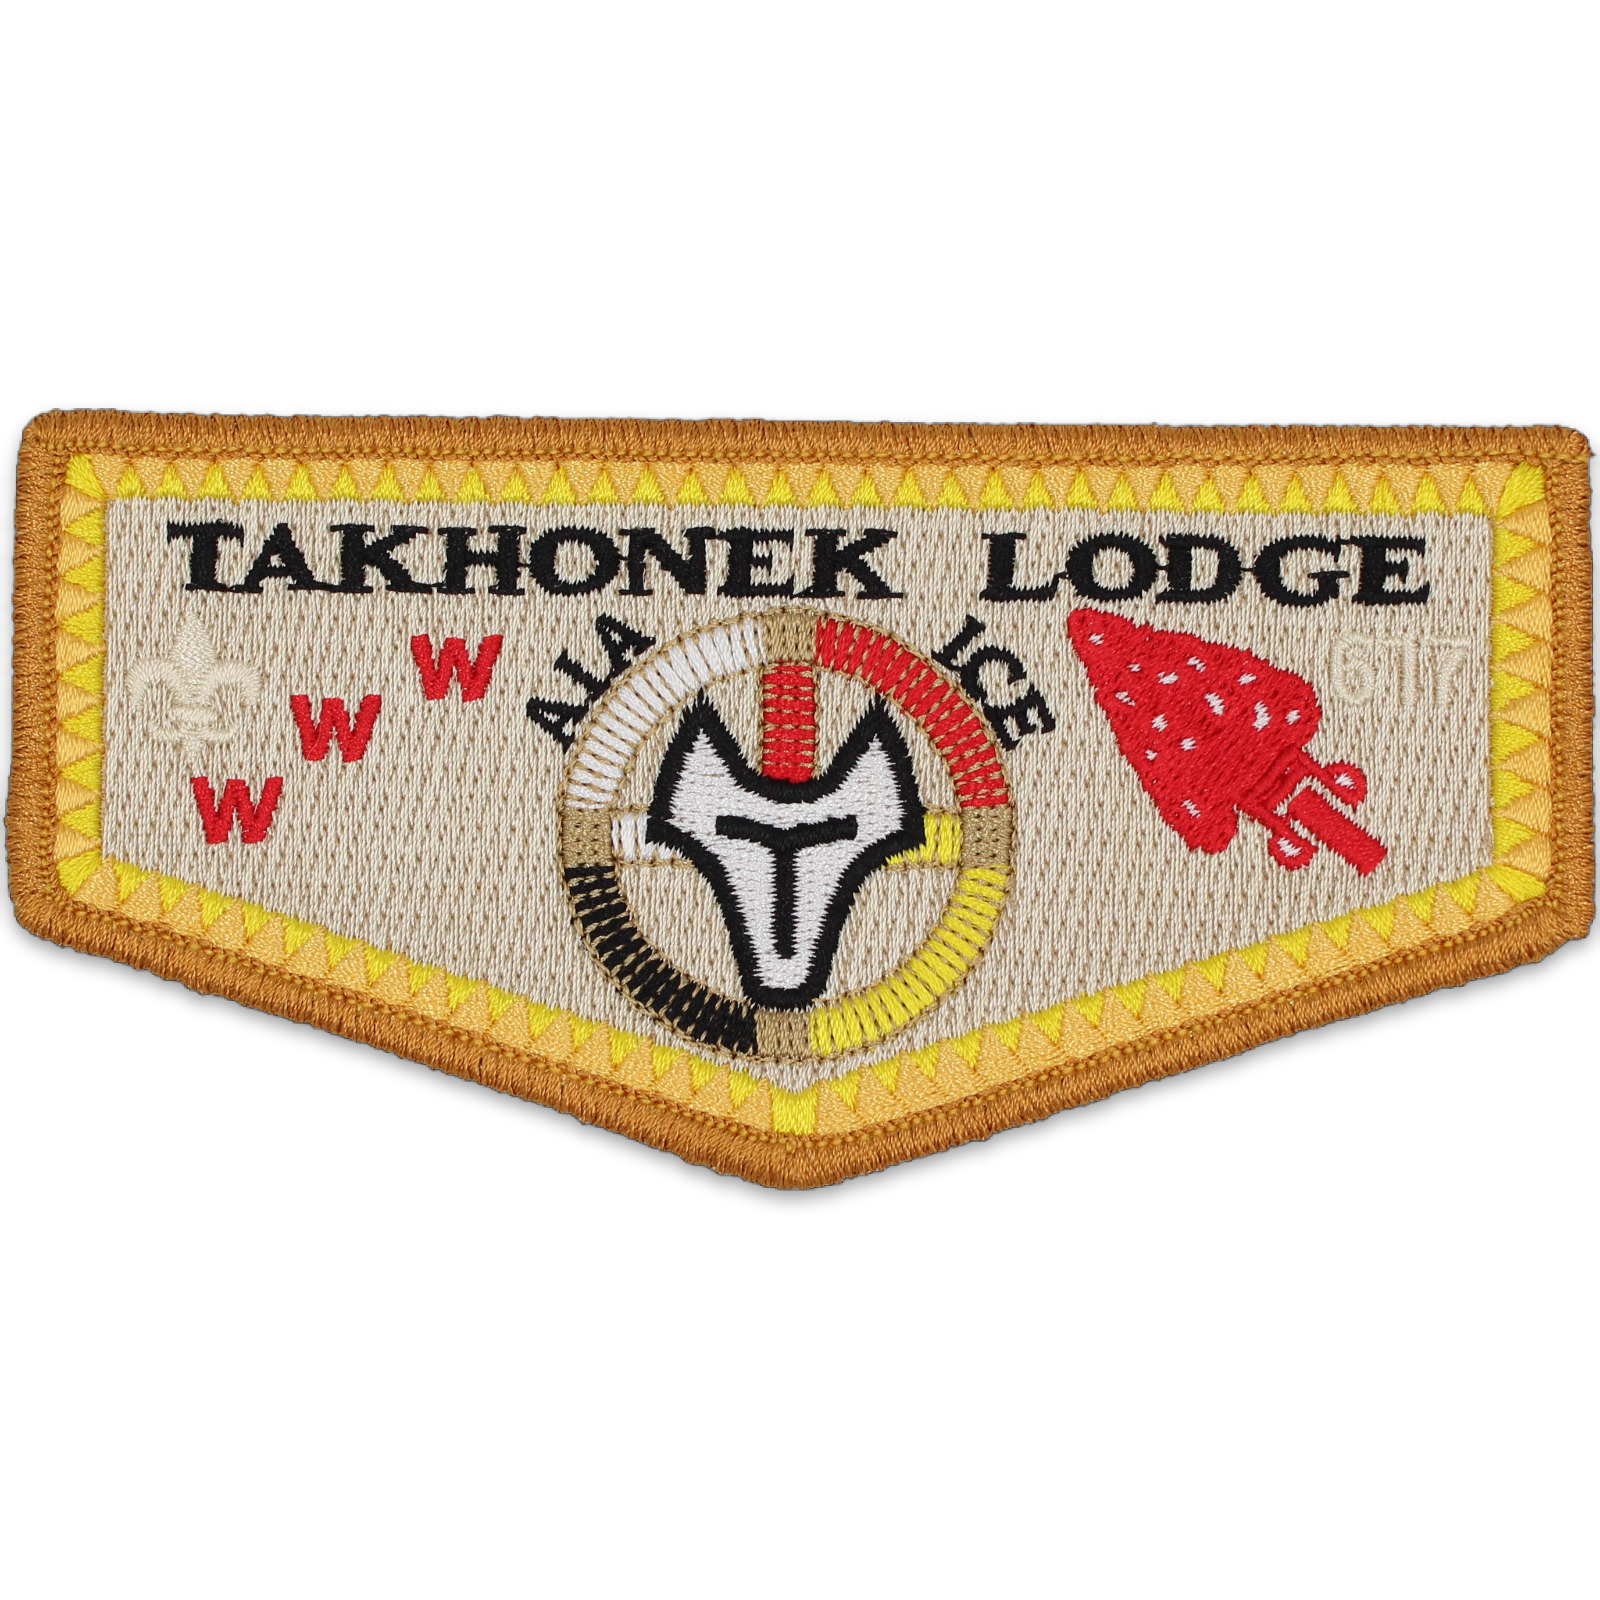 S72 AIA ICE Takhonek Lodge 617 Flap Buckskin Council West Virginia WV BSA OA